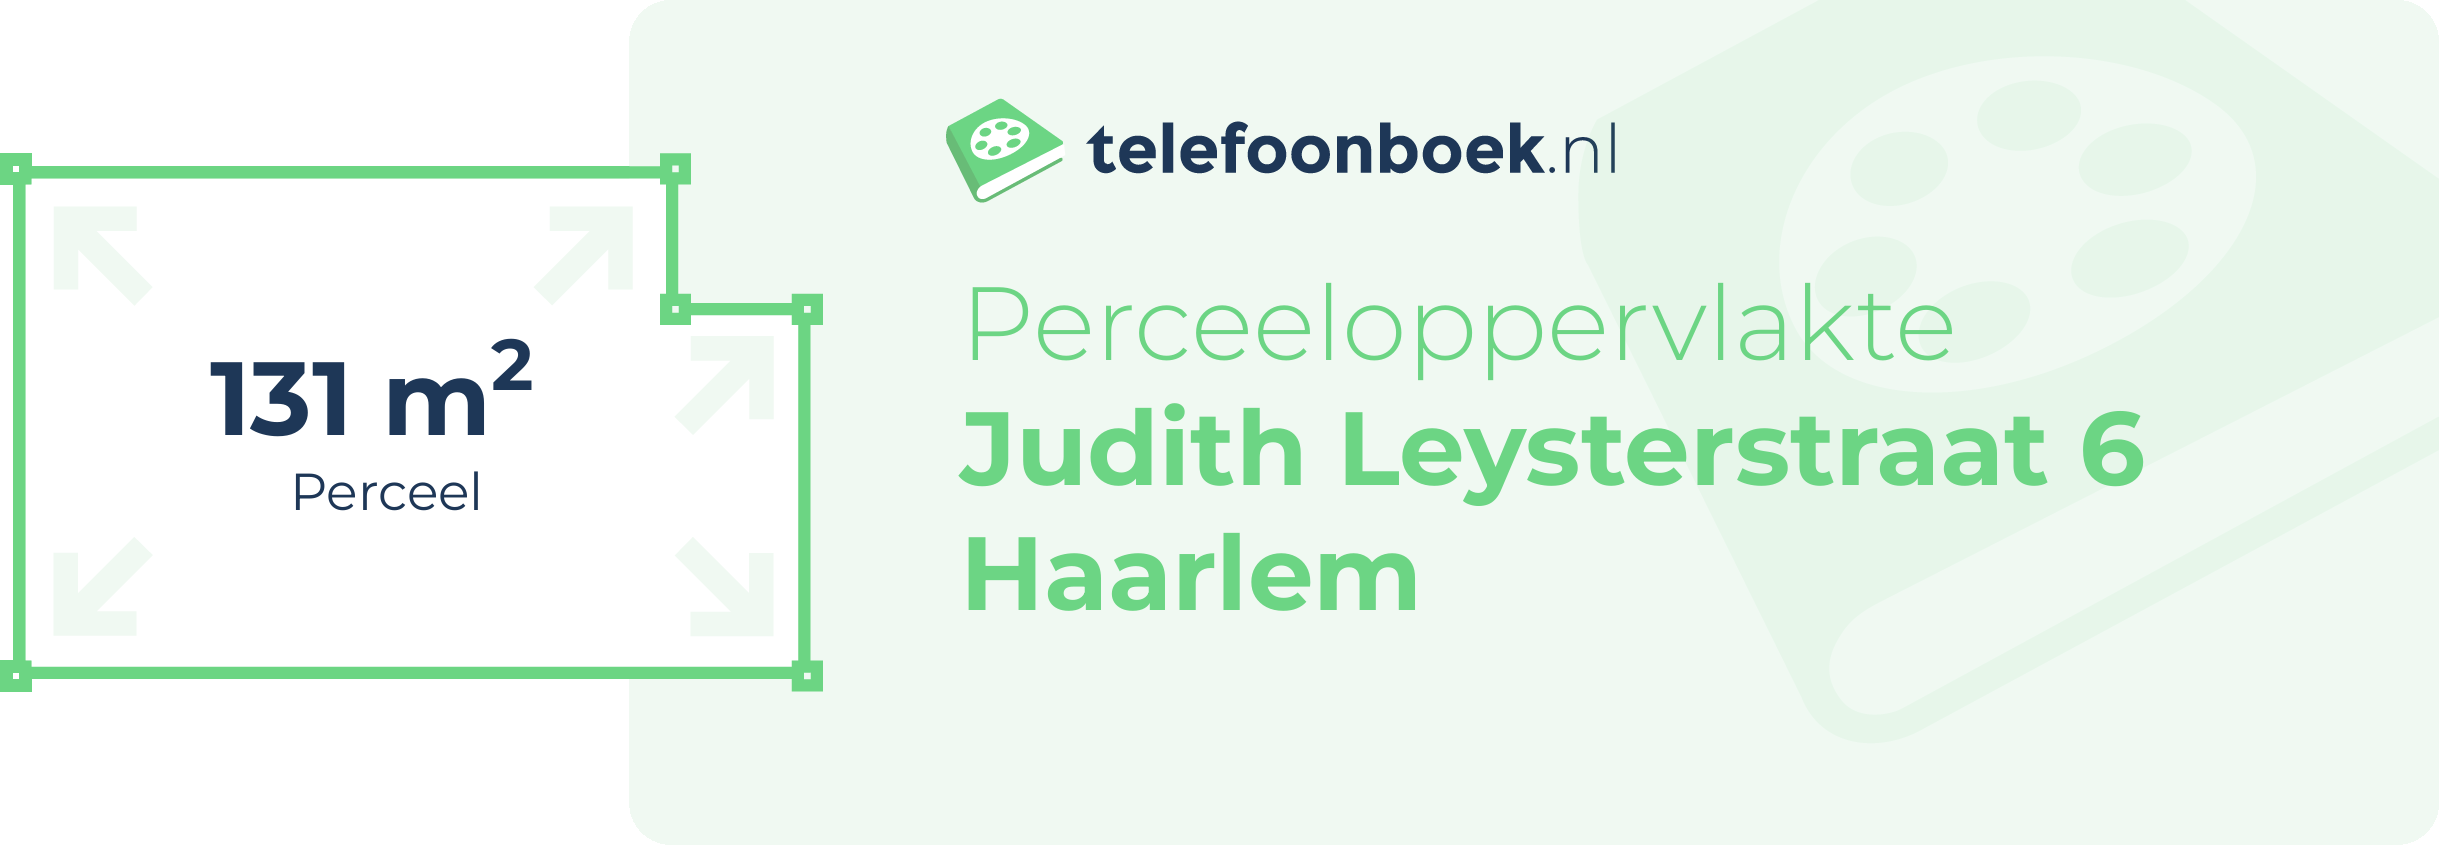 Perceeloppervlakte Judith Leysterstraat 6 Haarlem